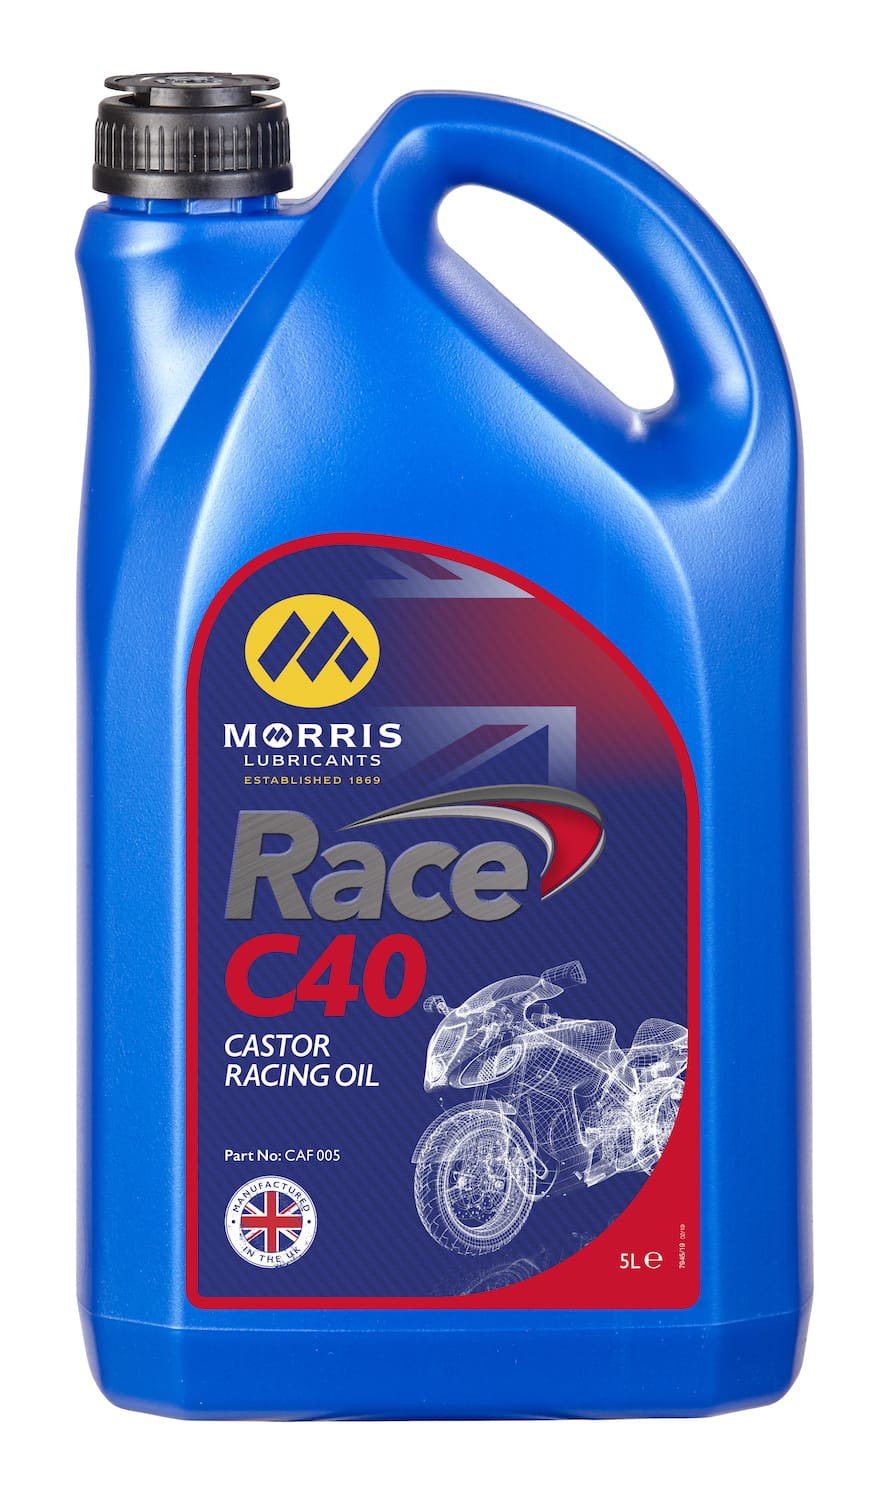 Race C40 (Formerly MLR 40 Castor Racing Oil)